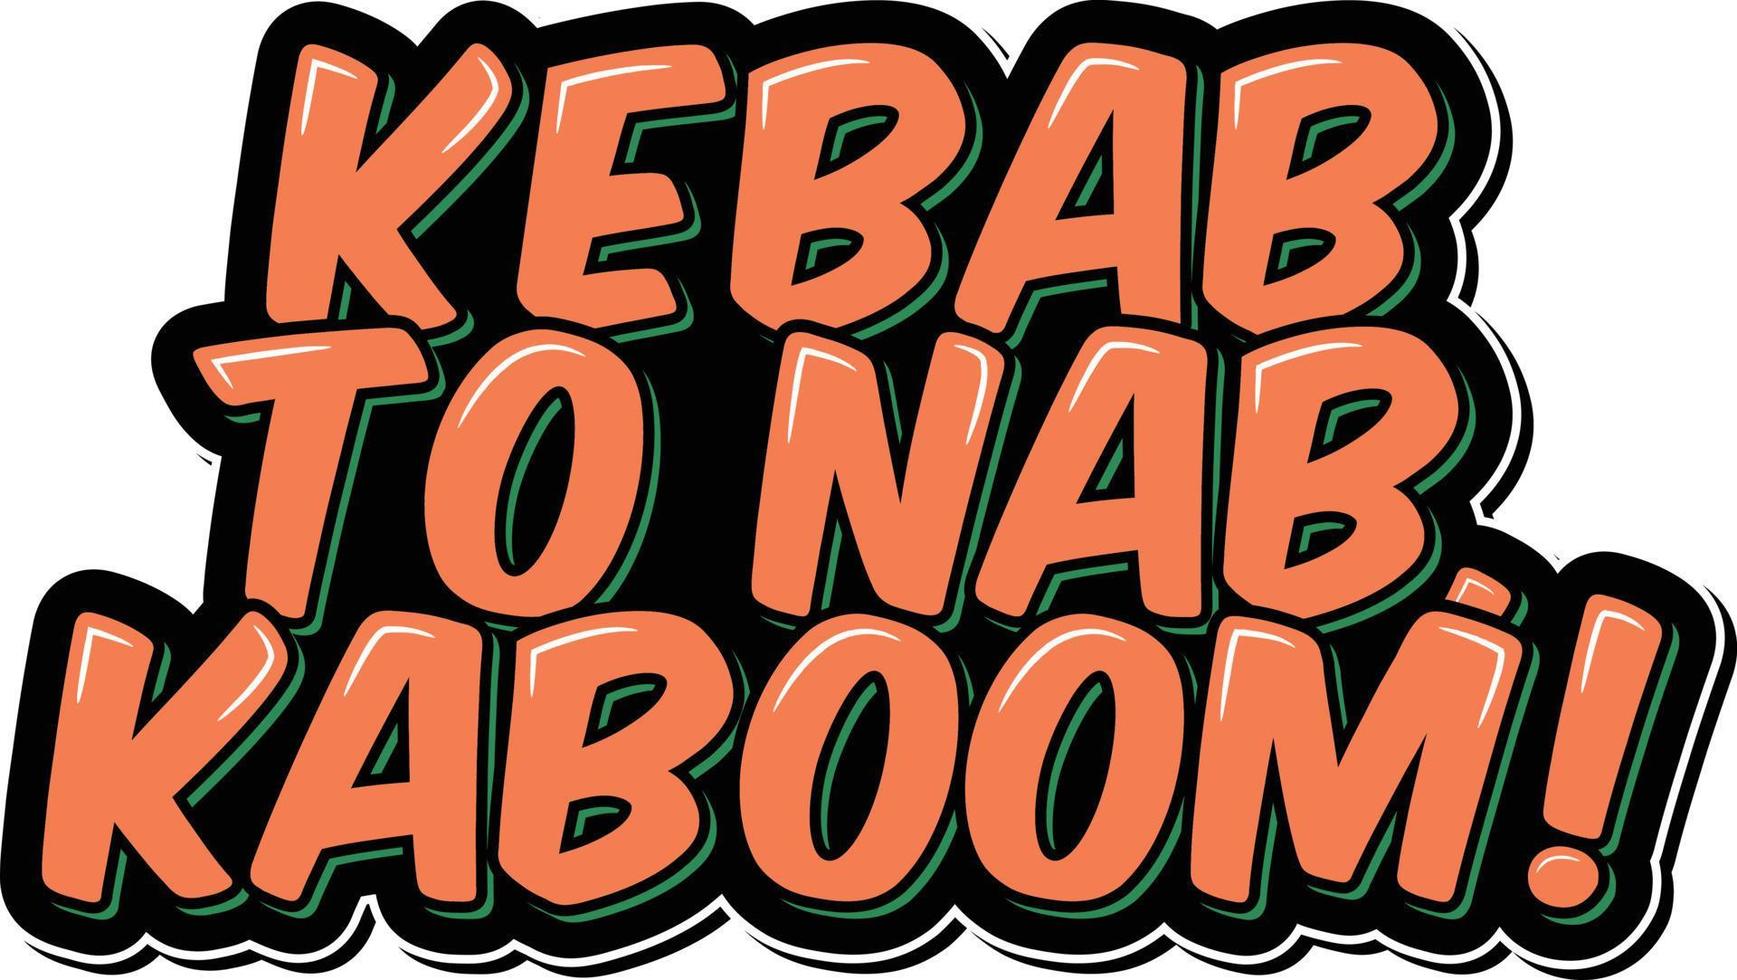 Kebab Typography Design vector